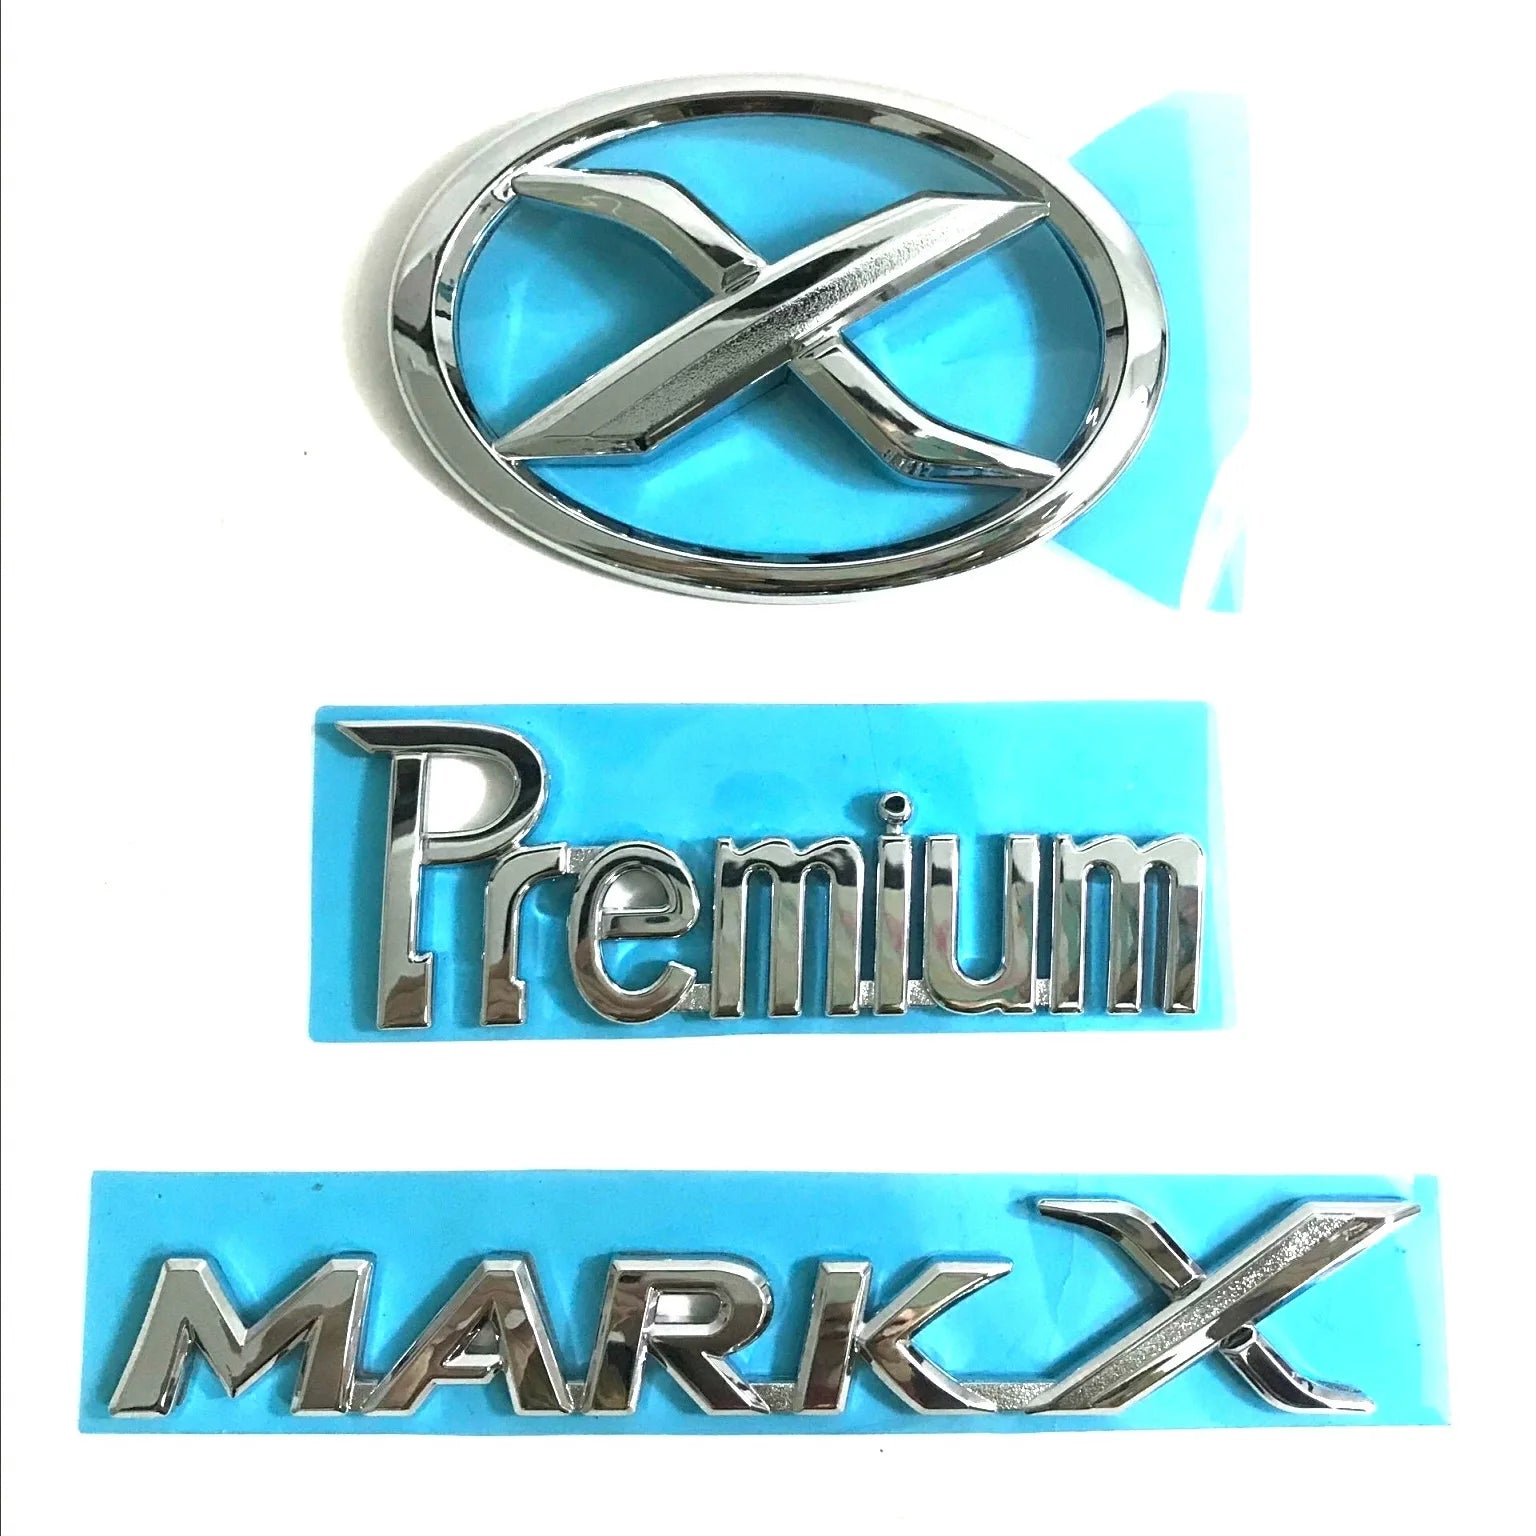 1 Pcs 3D ABS MARK X Emblem Premium Car Badge X Rear Truck Car Stickers Car Decor For Toyota MARKX MARK-X Car Accessories